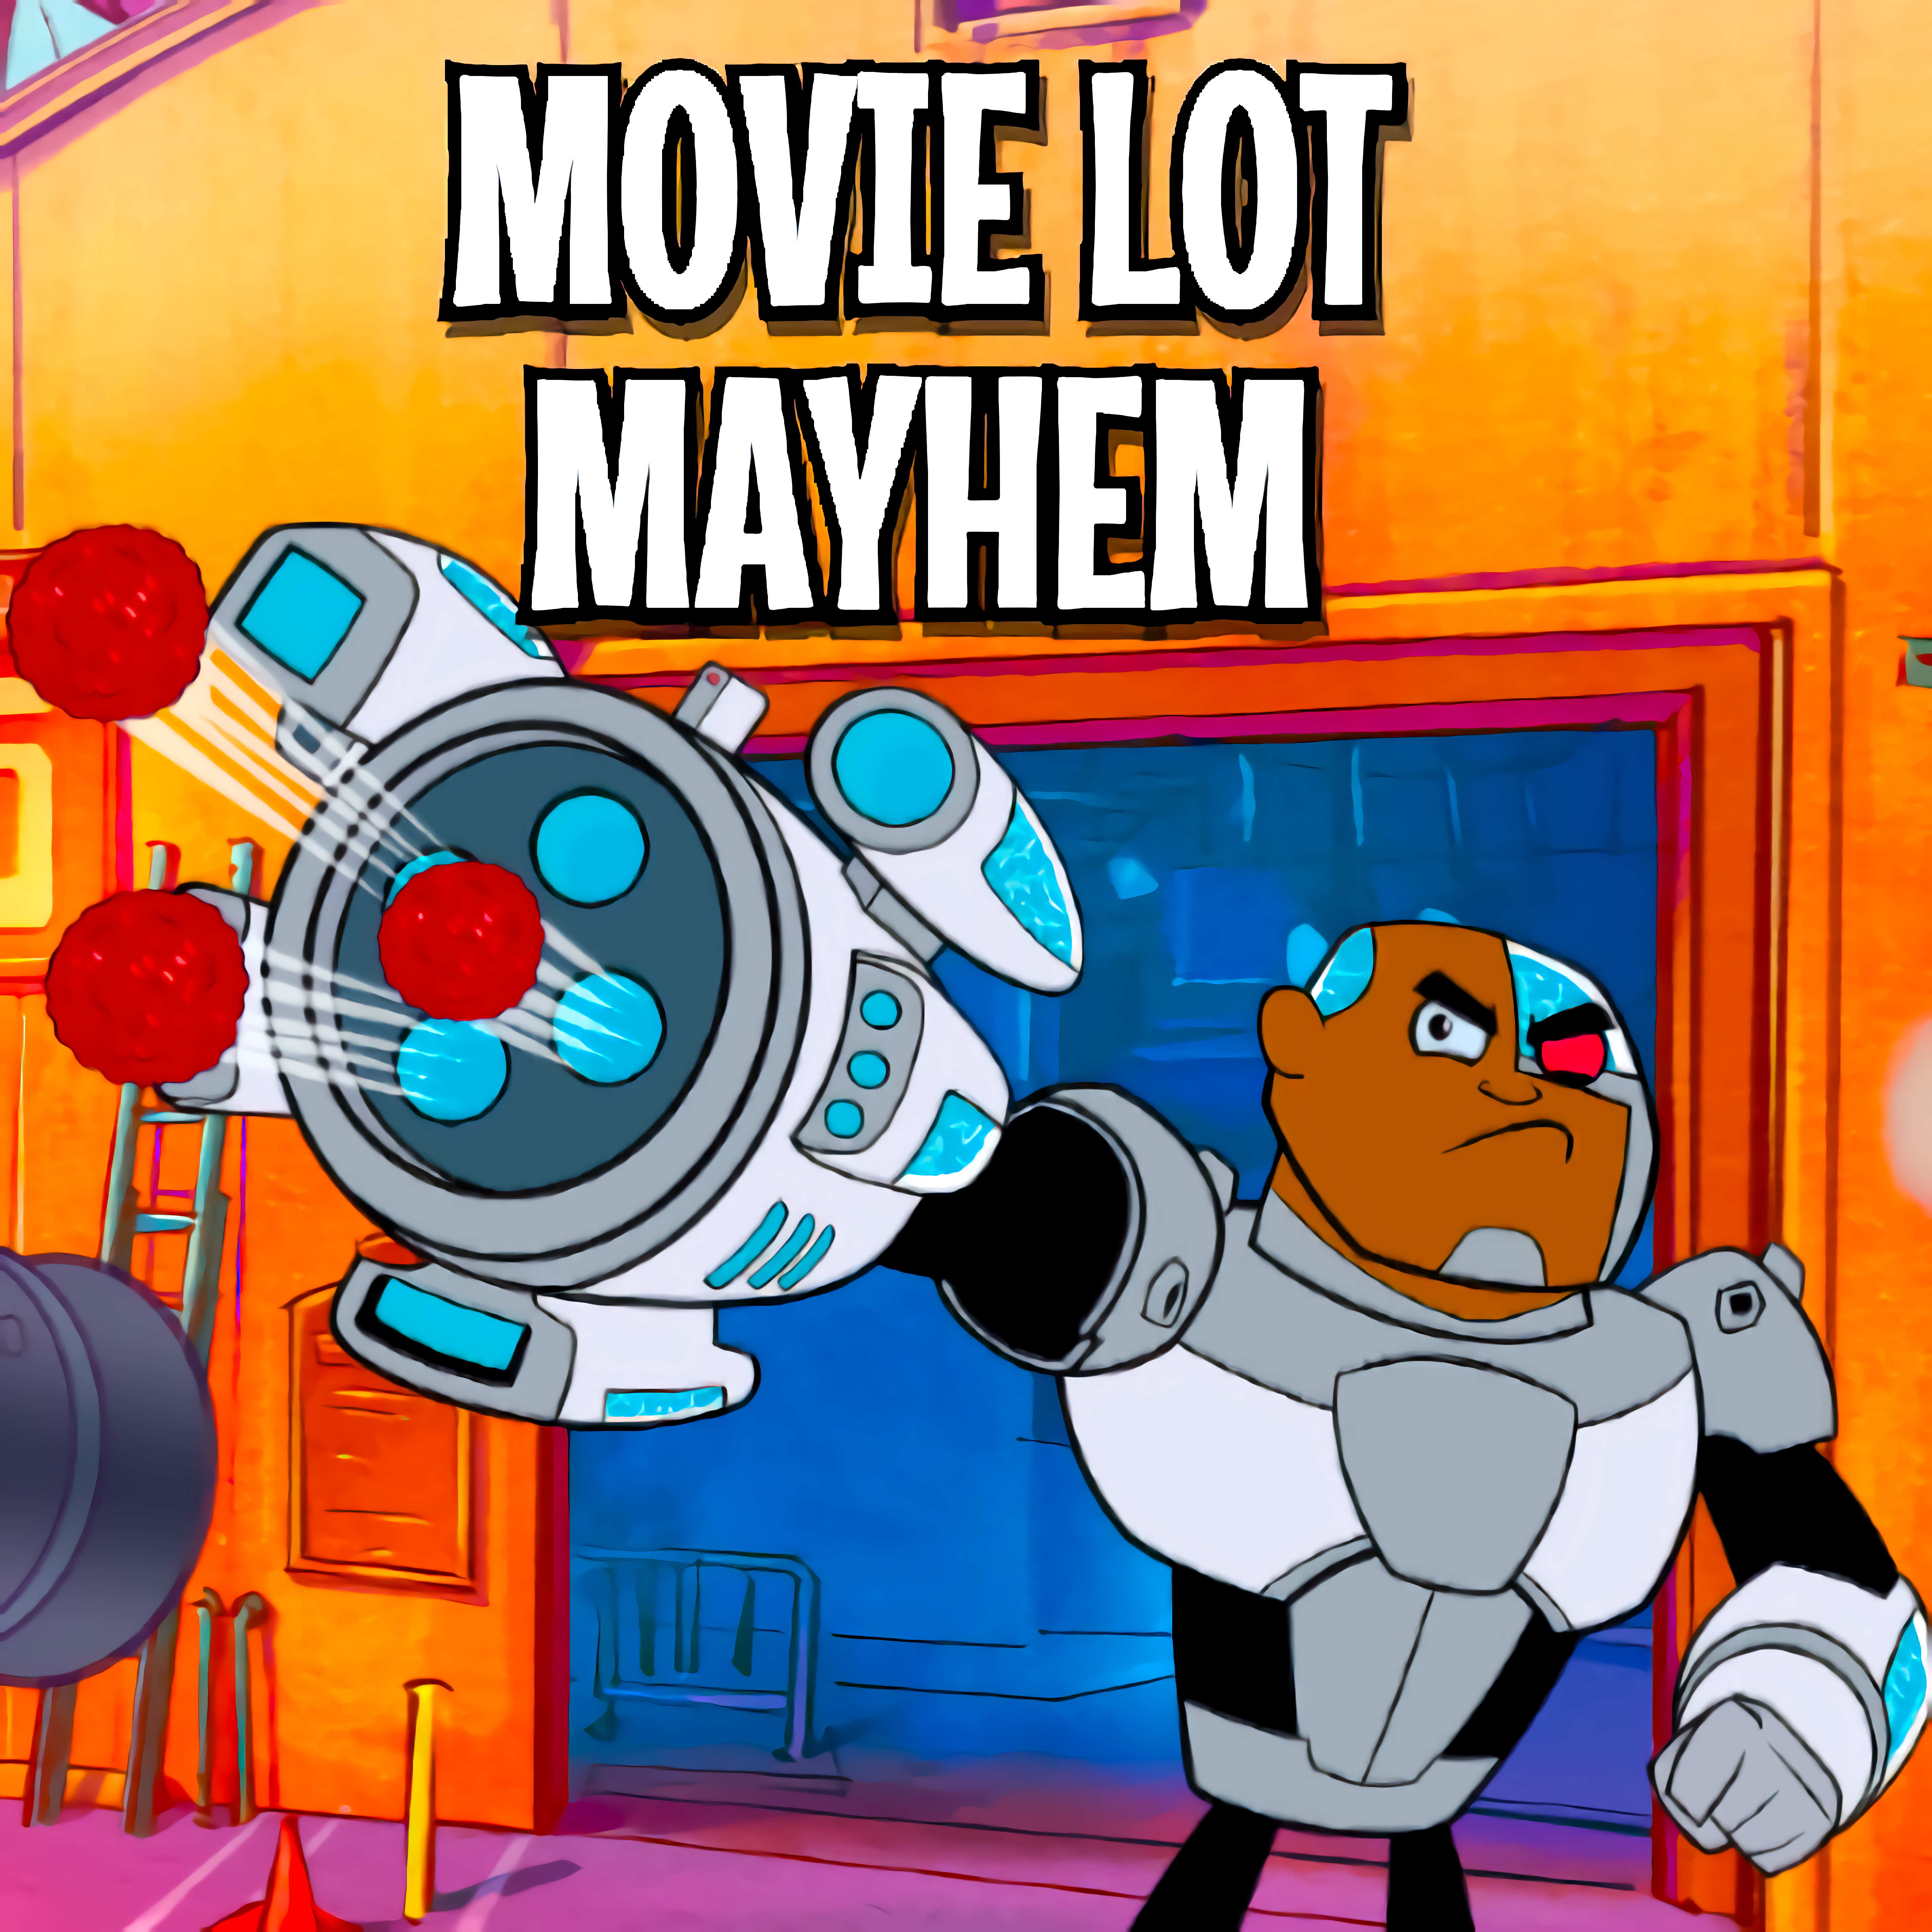 Movie Lot Mayhem - Teen Titans Go!